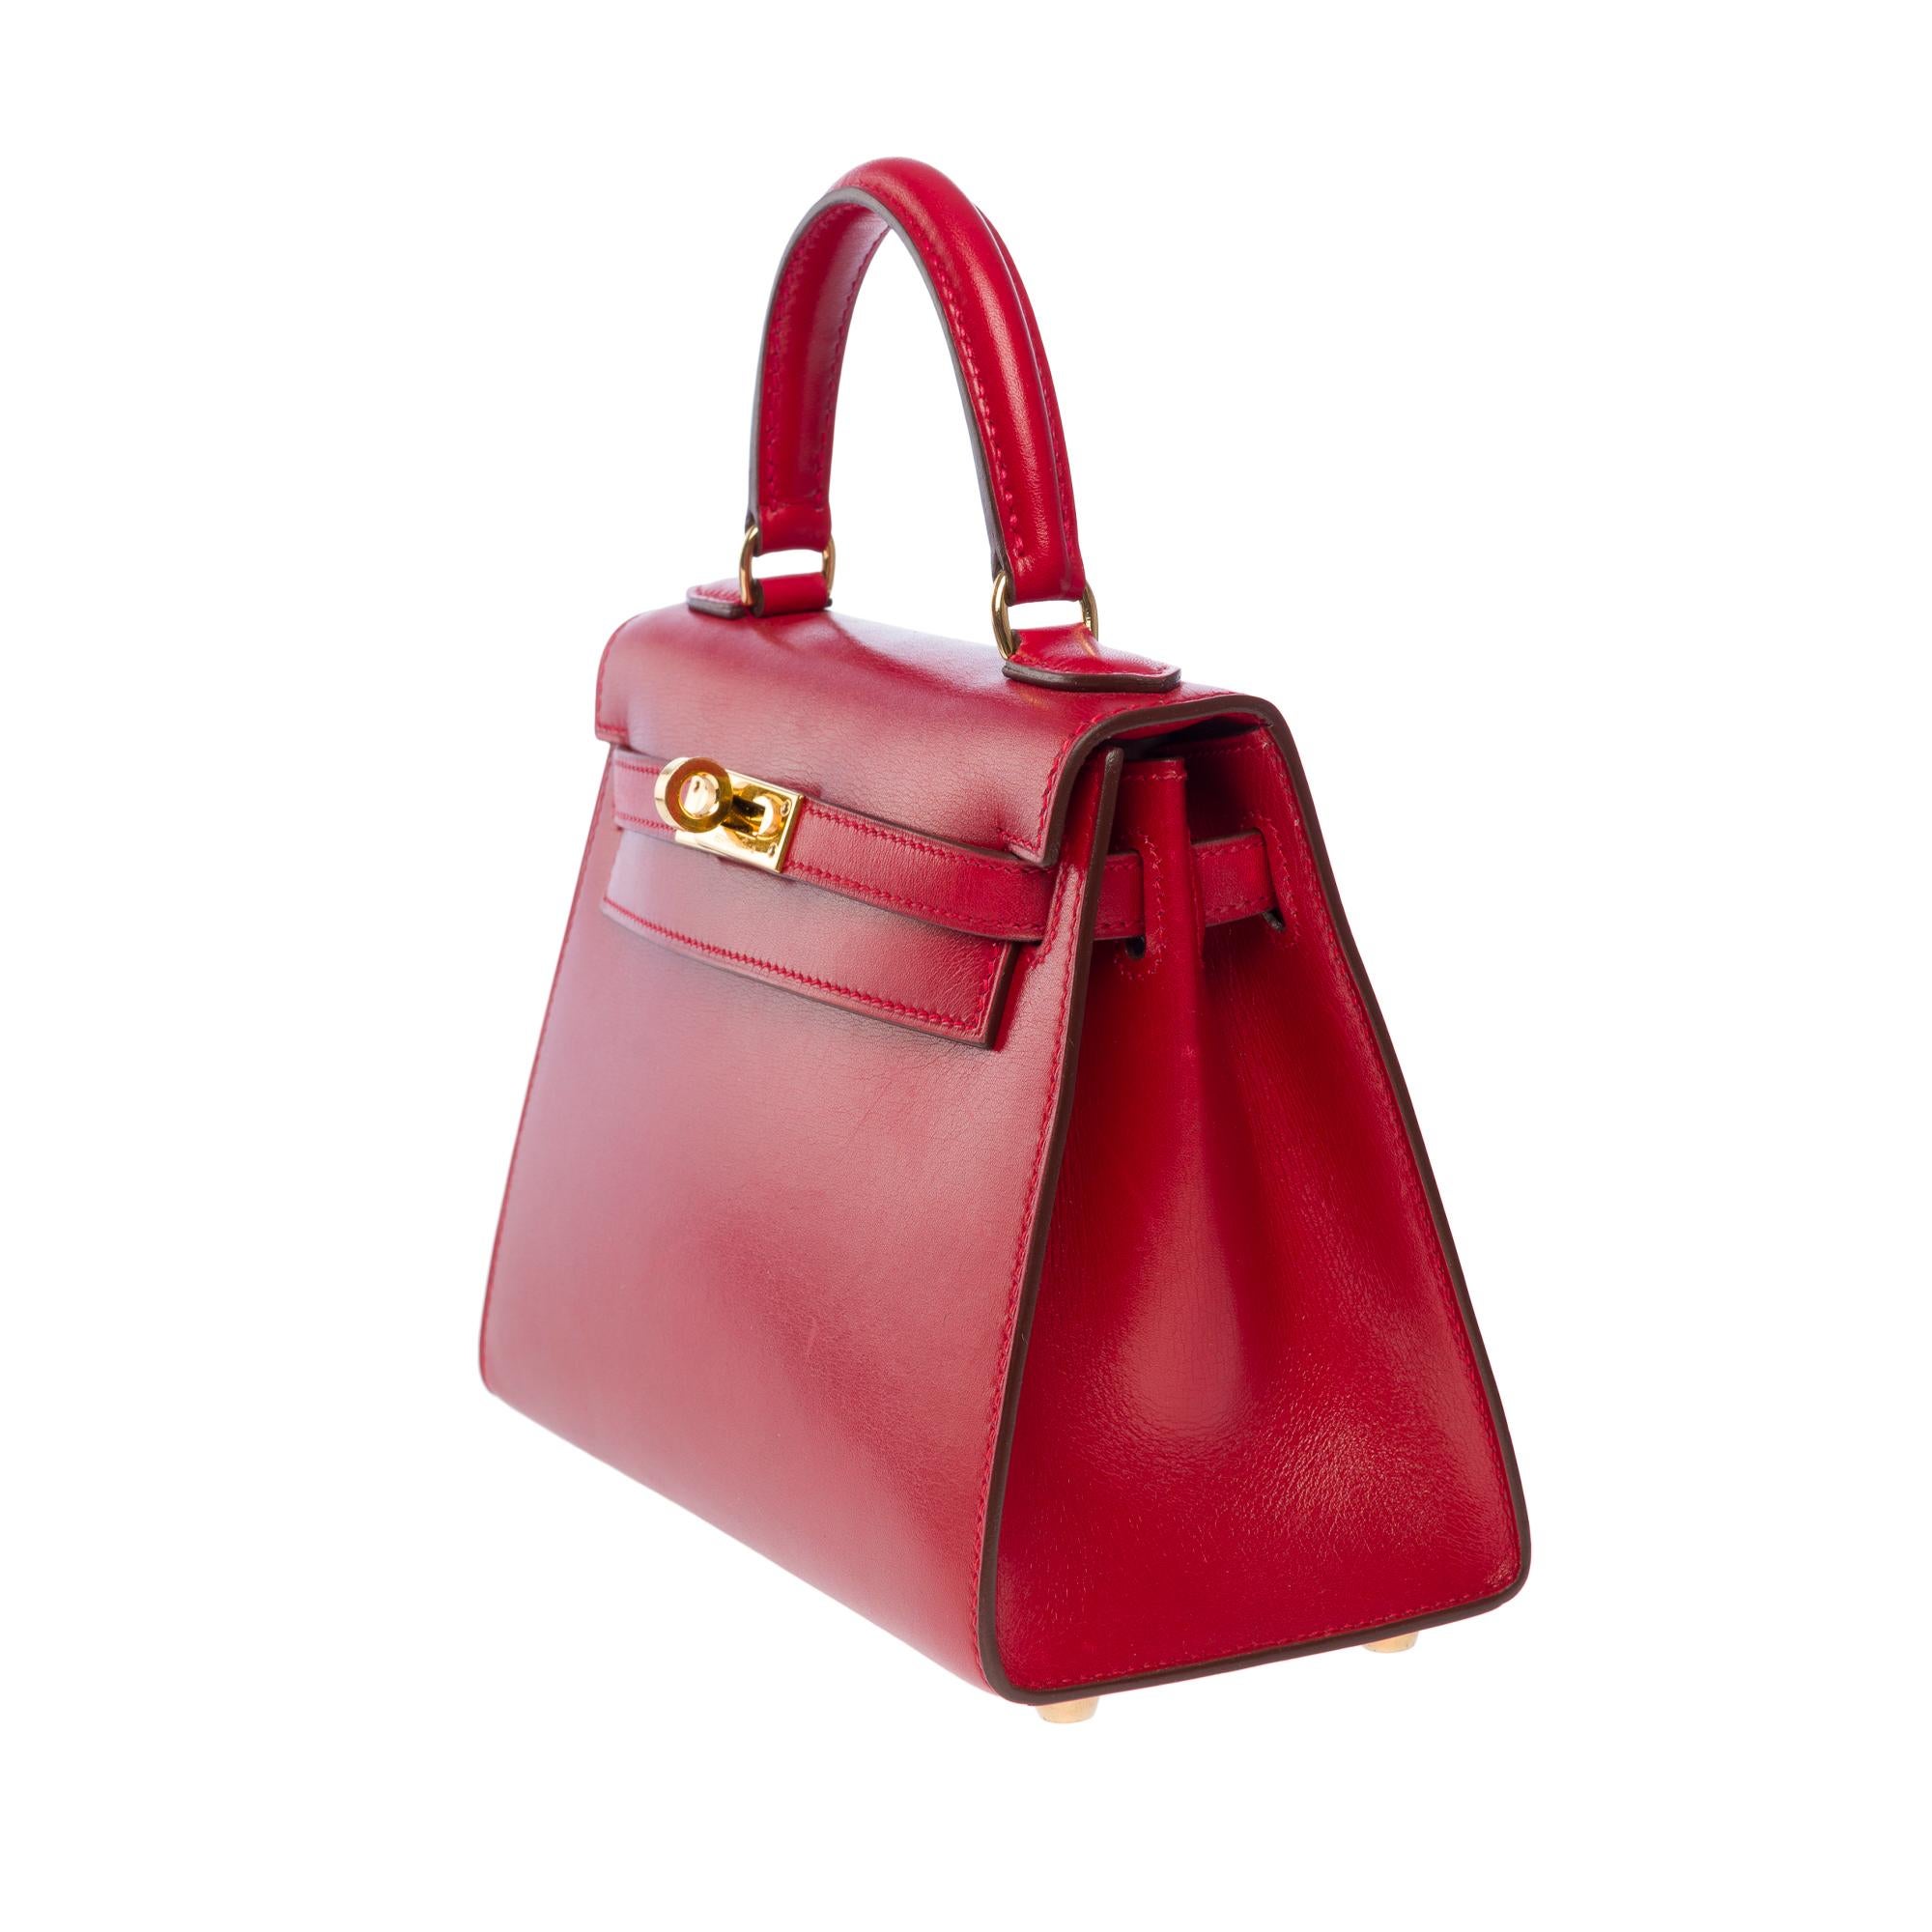 Rare Hermès Mini Kelly 20cm handbag double strap in Red H box calfskin, GHW For Sale 1